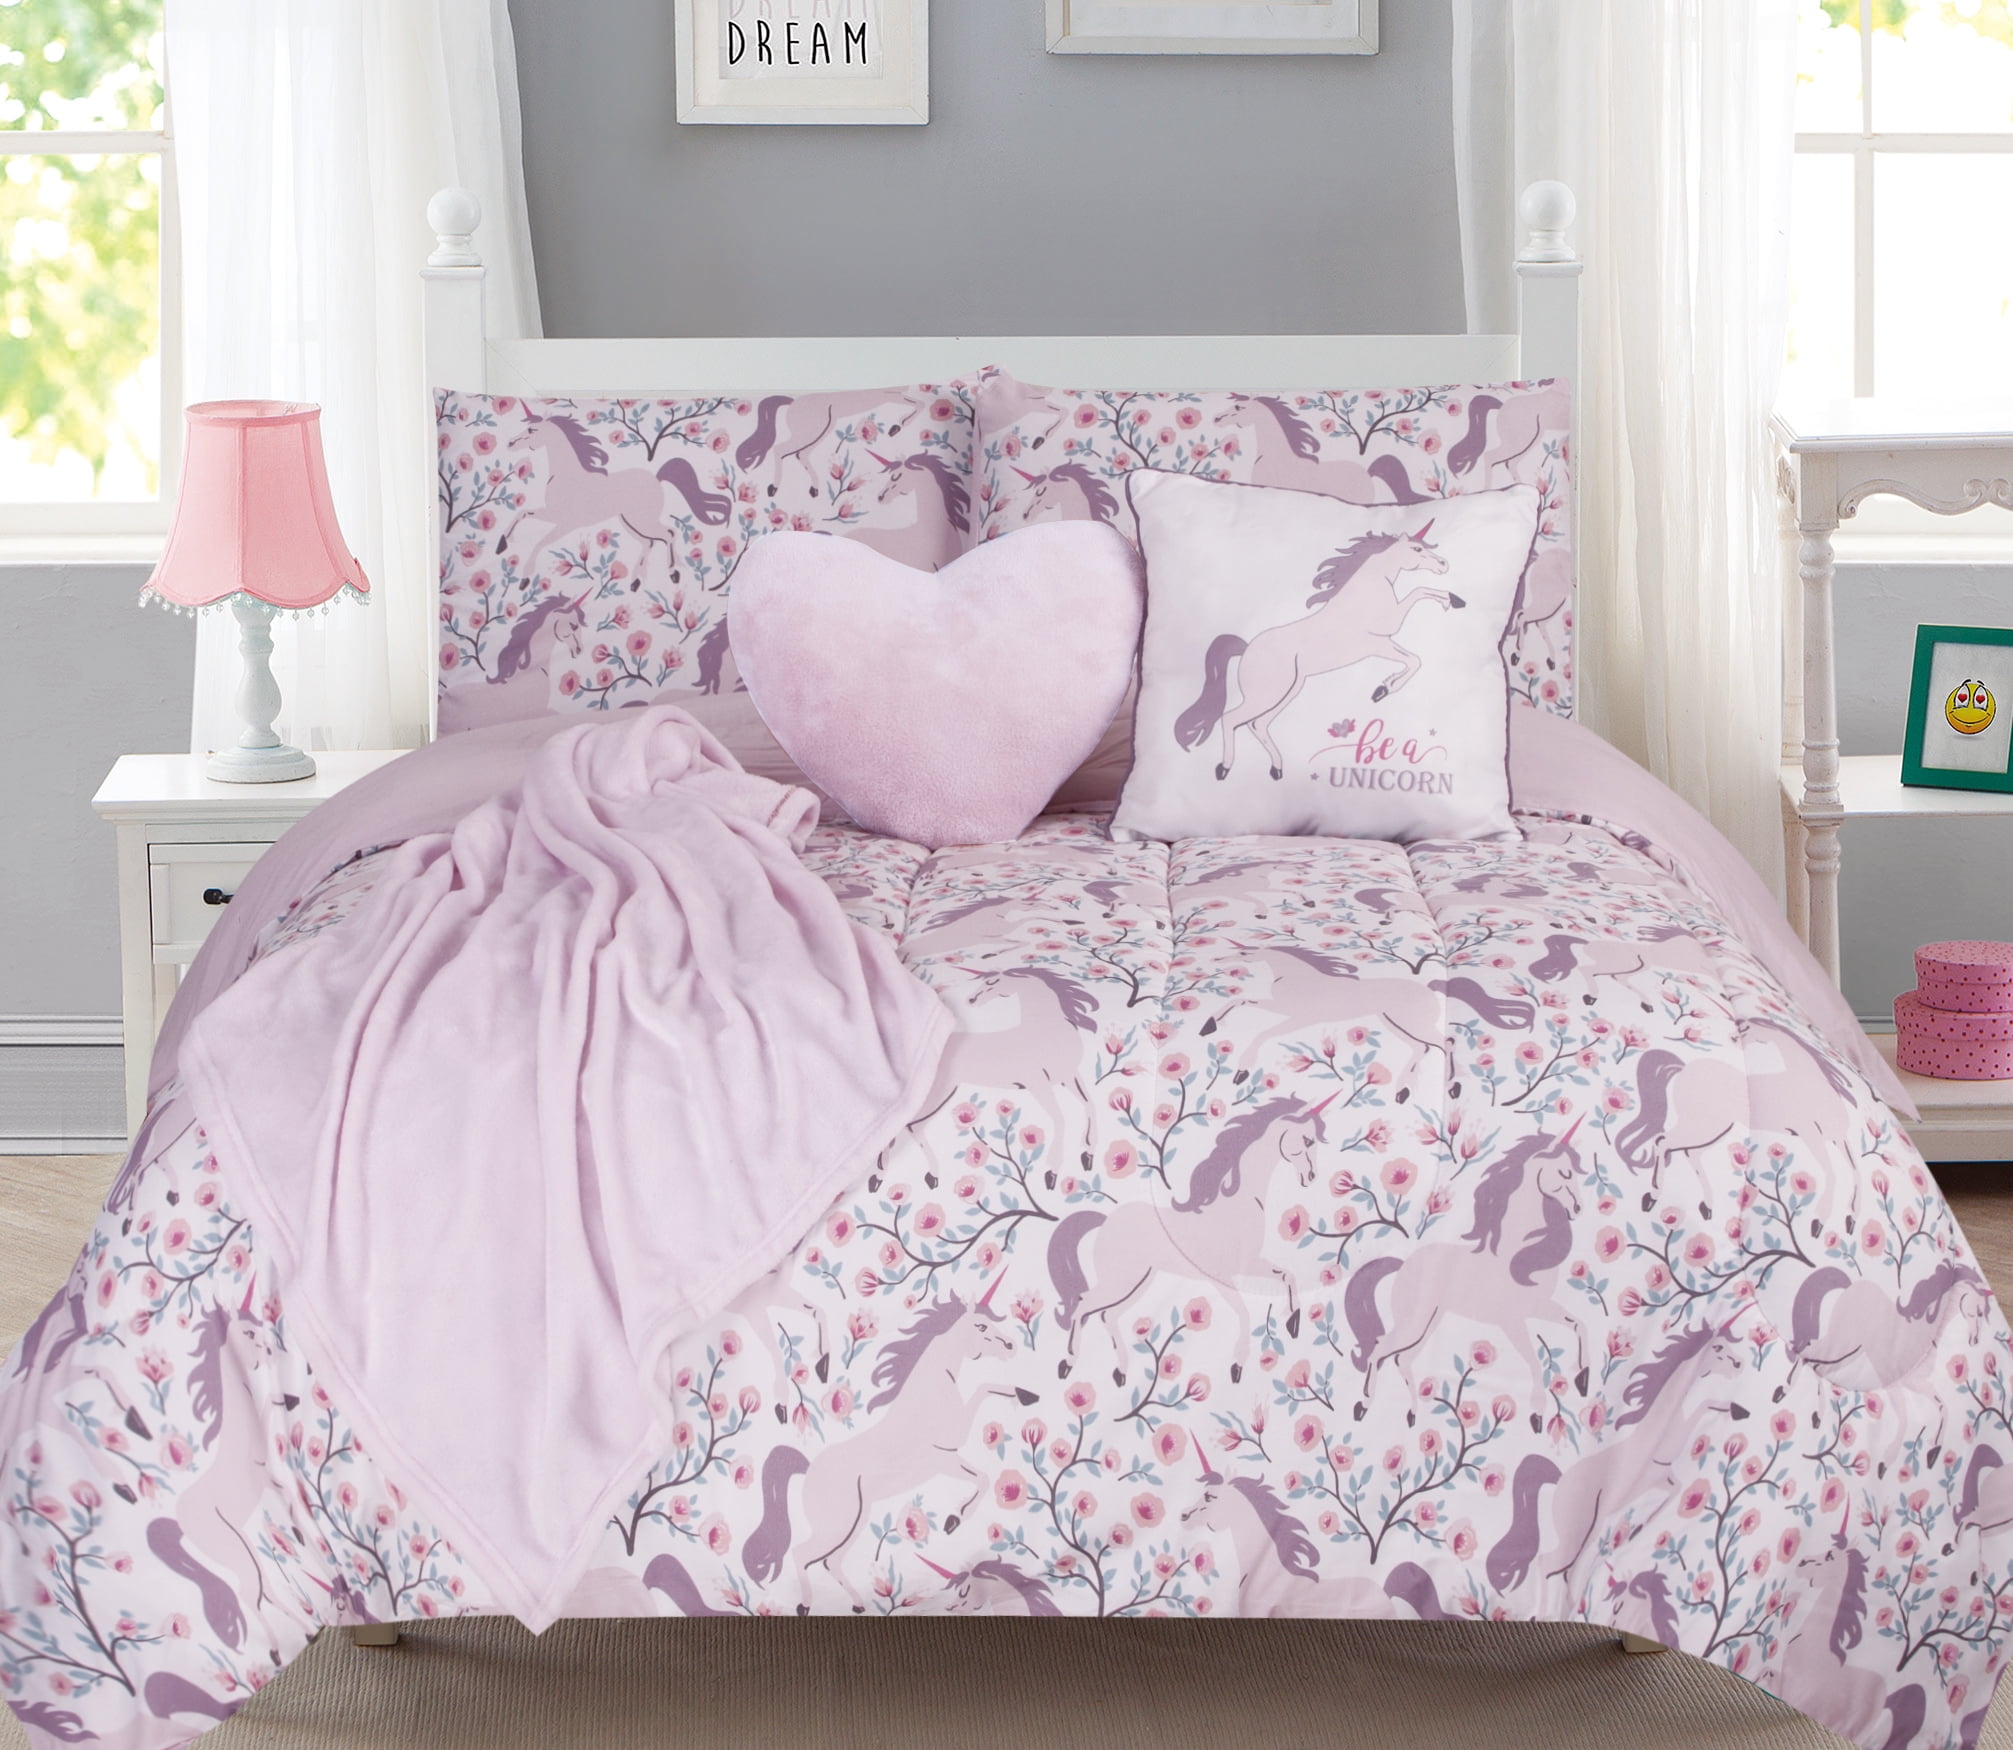 King Size Girls Bedding Set Comforter Sheets Sham 8 Piece Girl Comfort Purple 